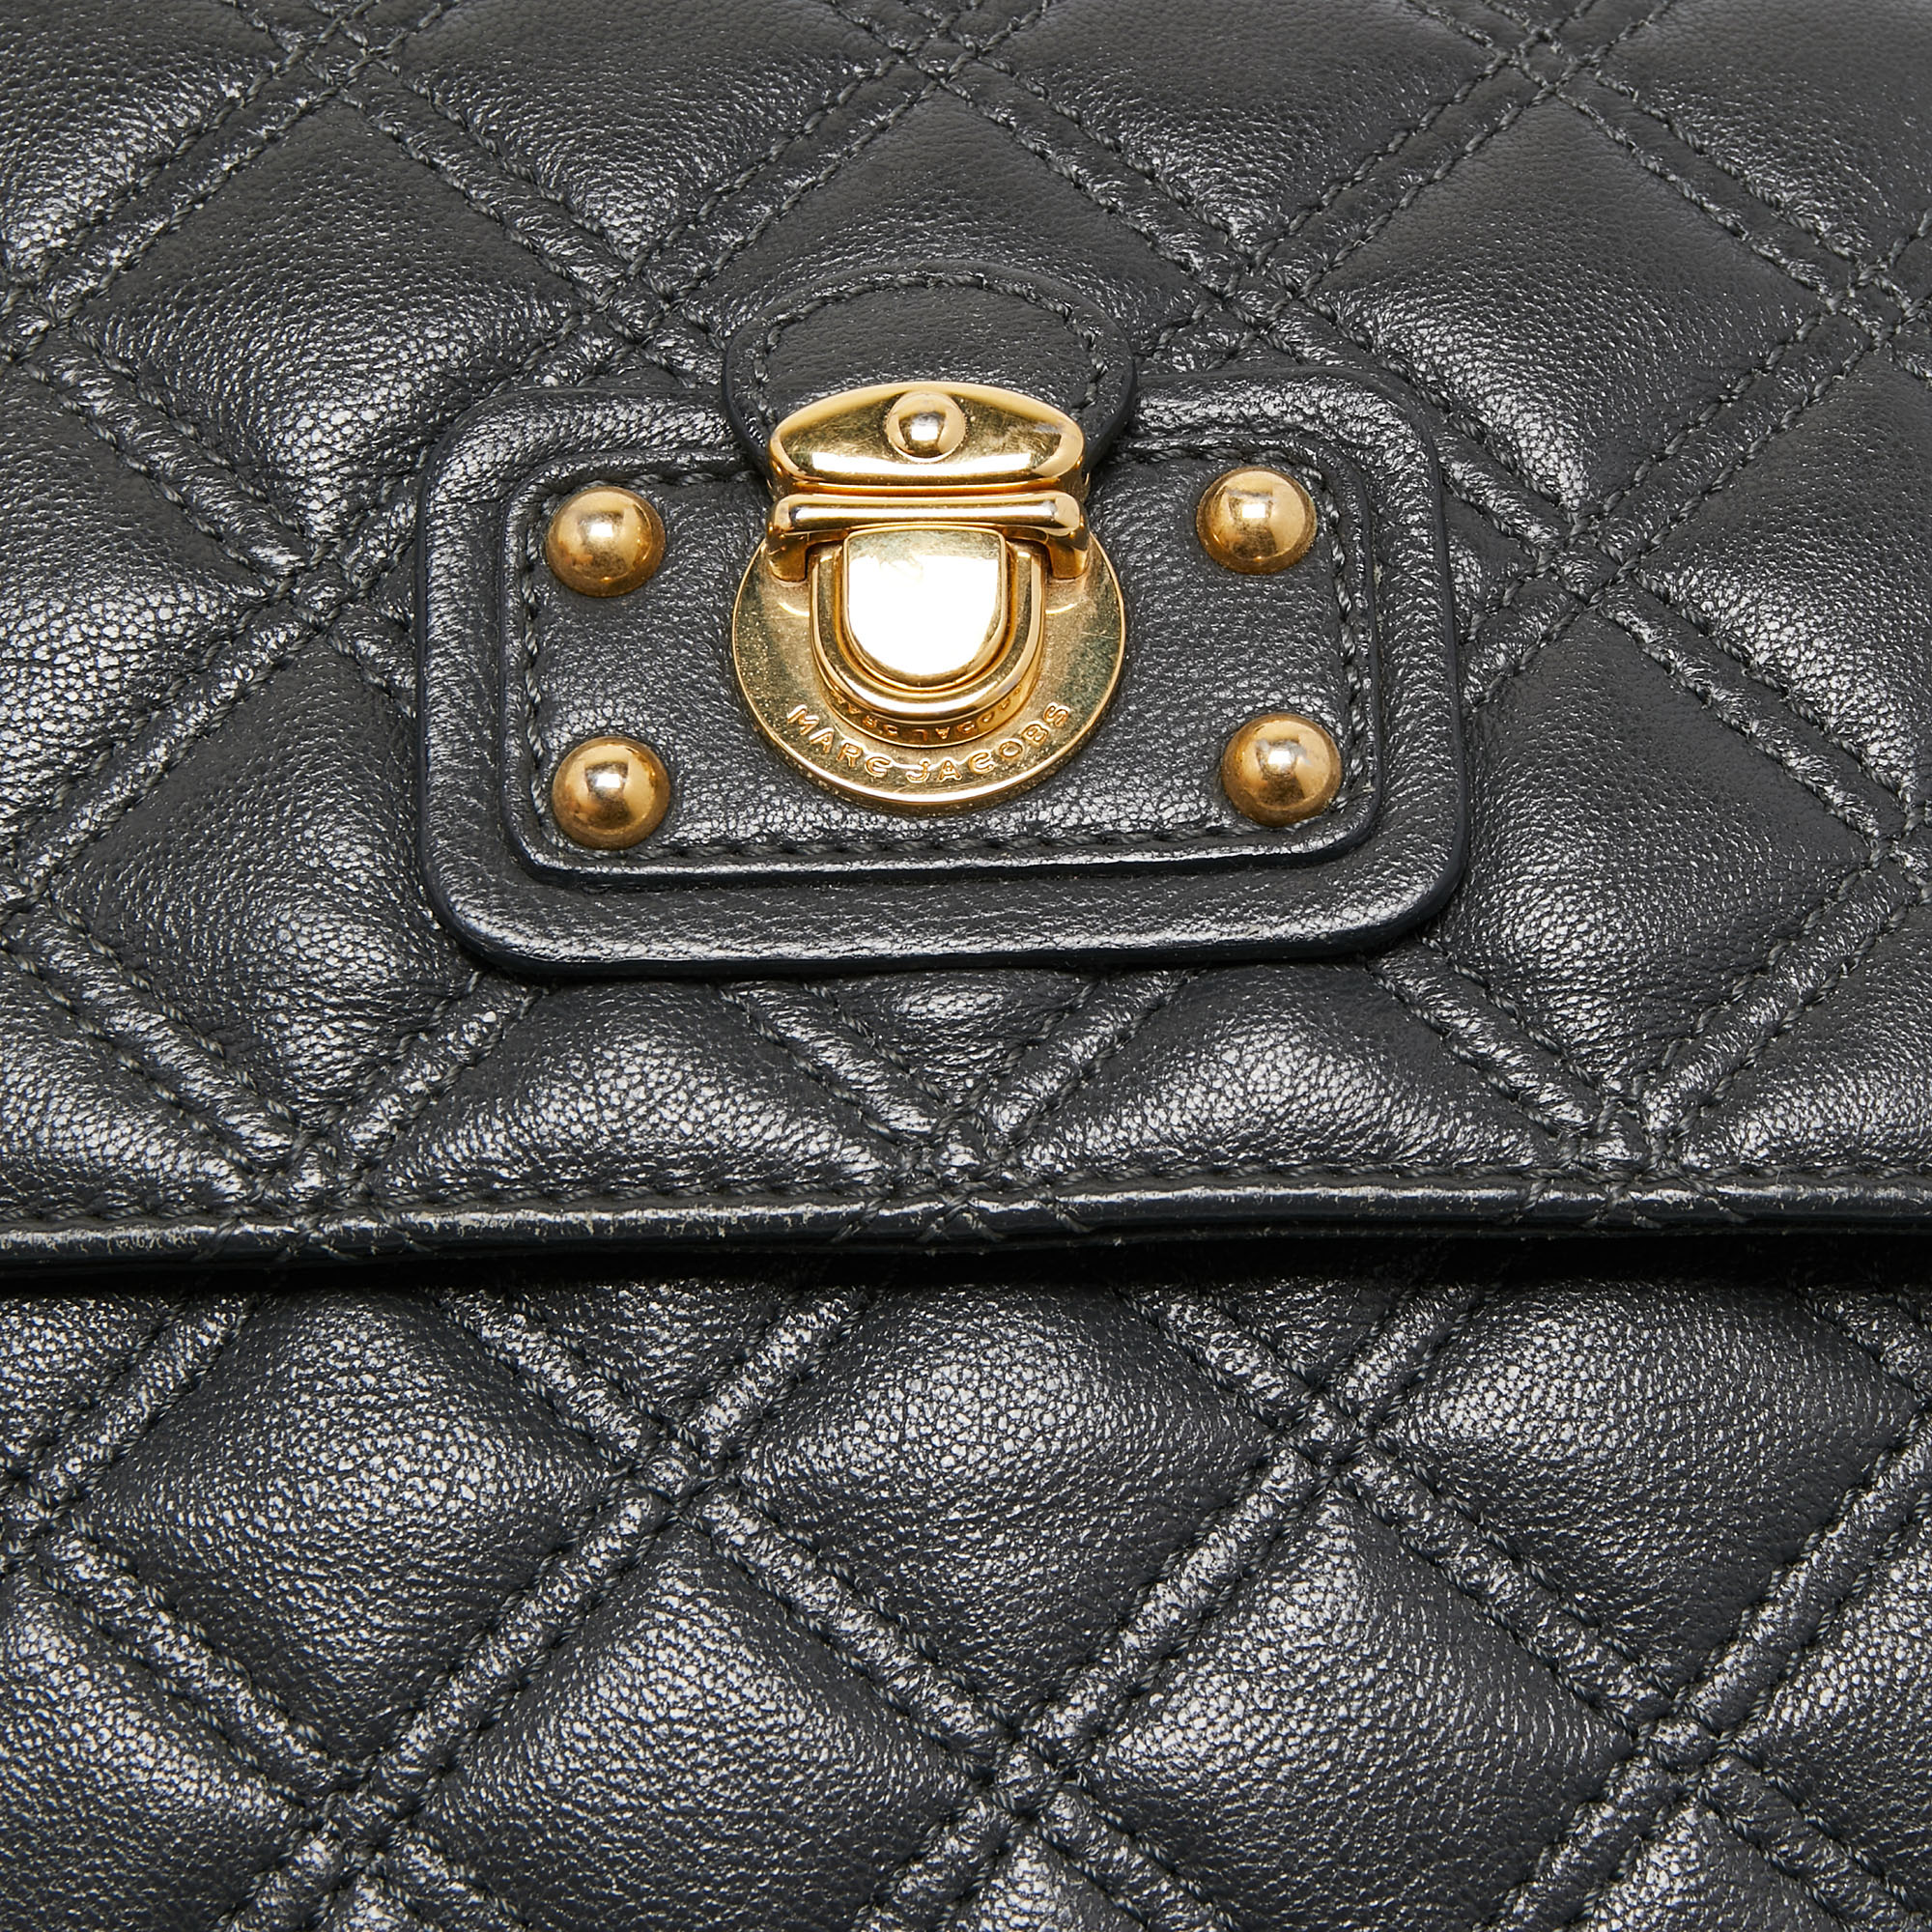 Marc Jacobs Dark Grey Quilted Leather Flap Shoulder Bag